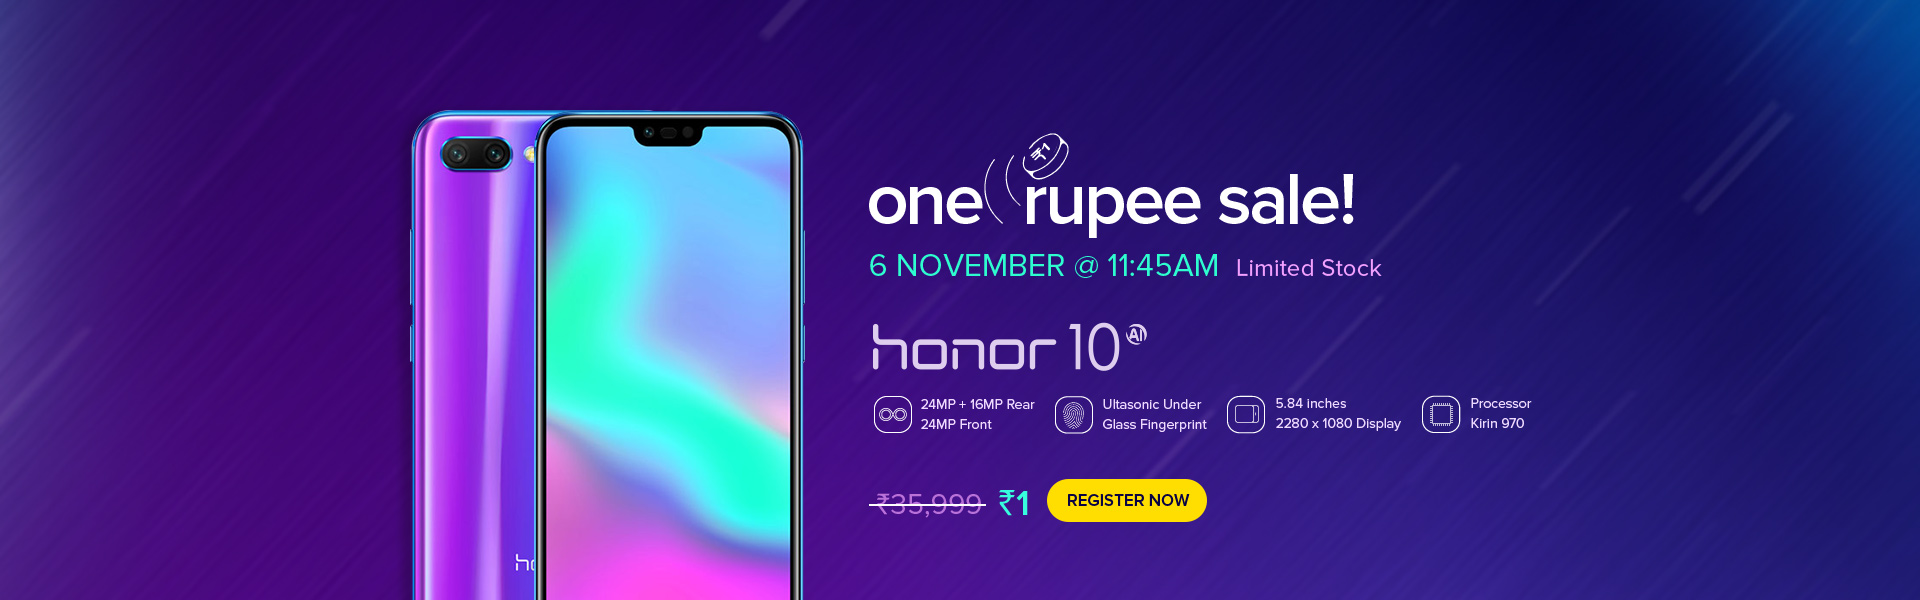 Honor 10 AI One Rupee Sale! 